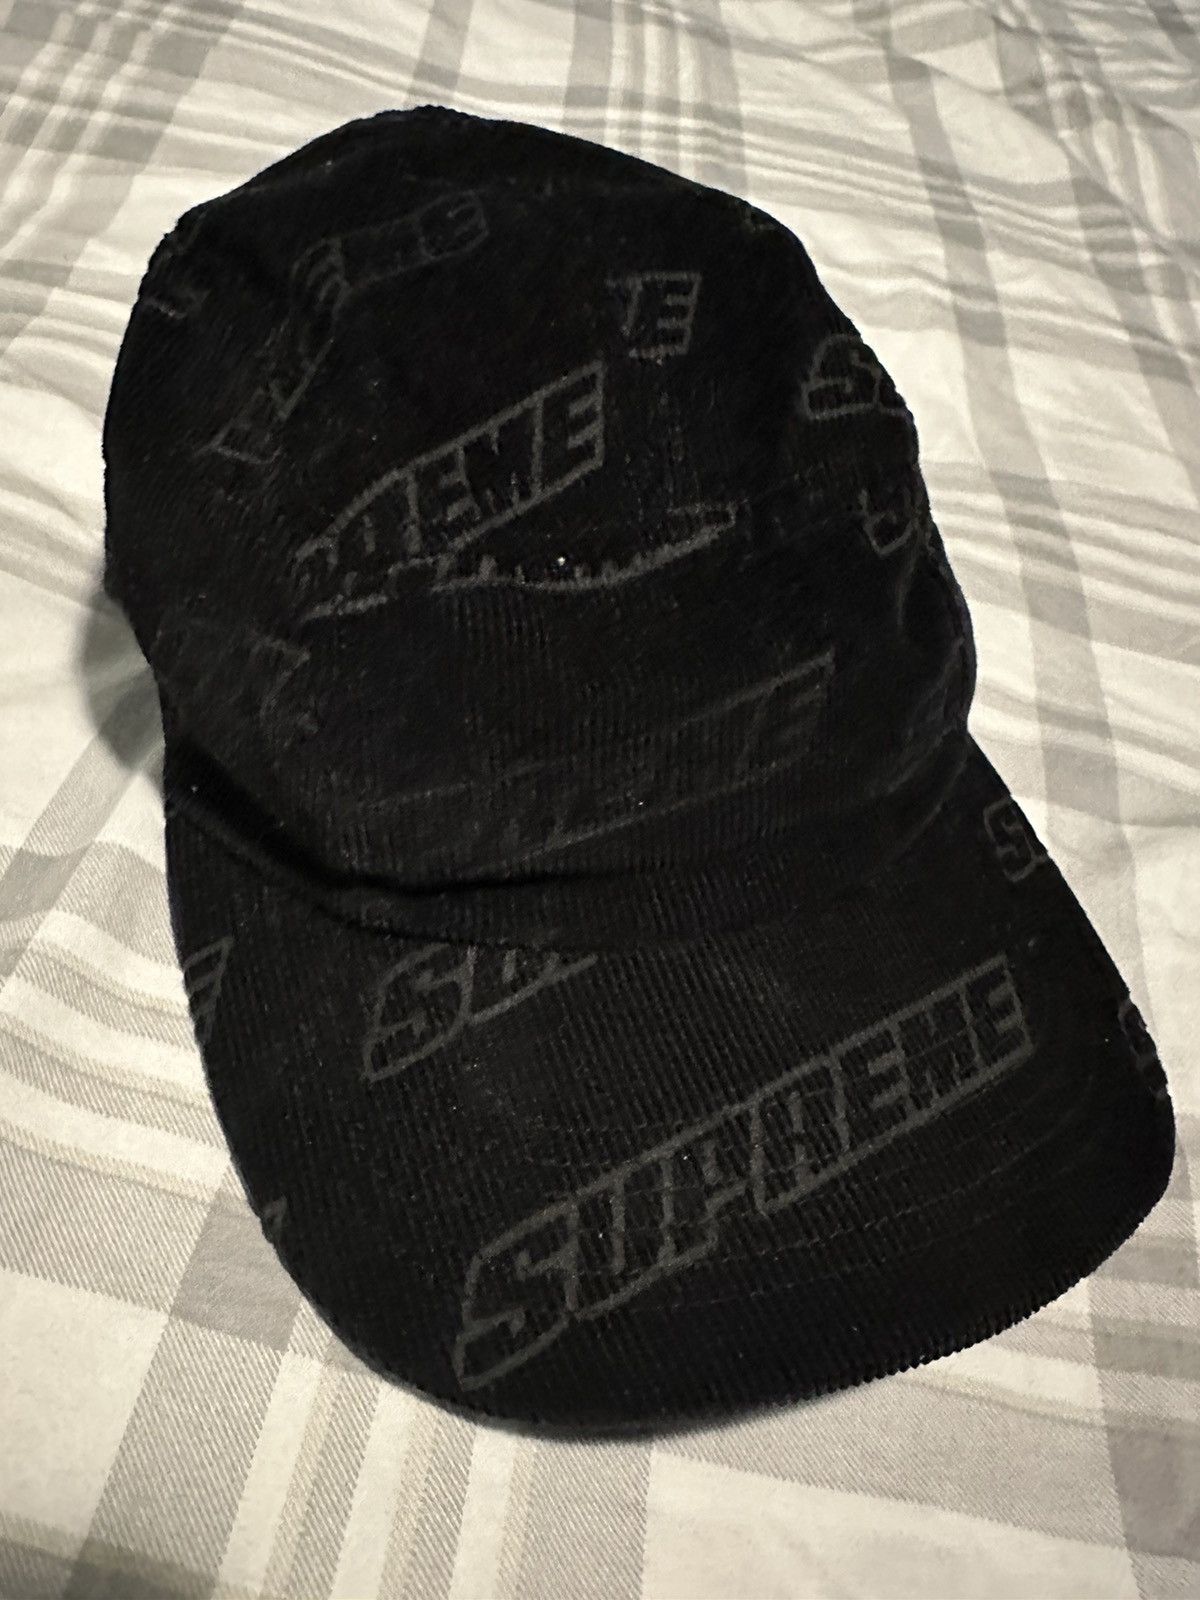 Supreme 5 Panel Hat | Grailed